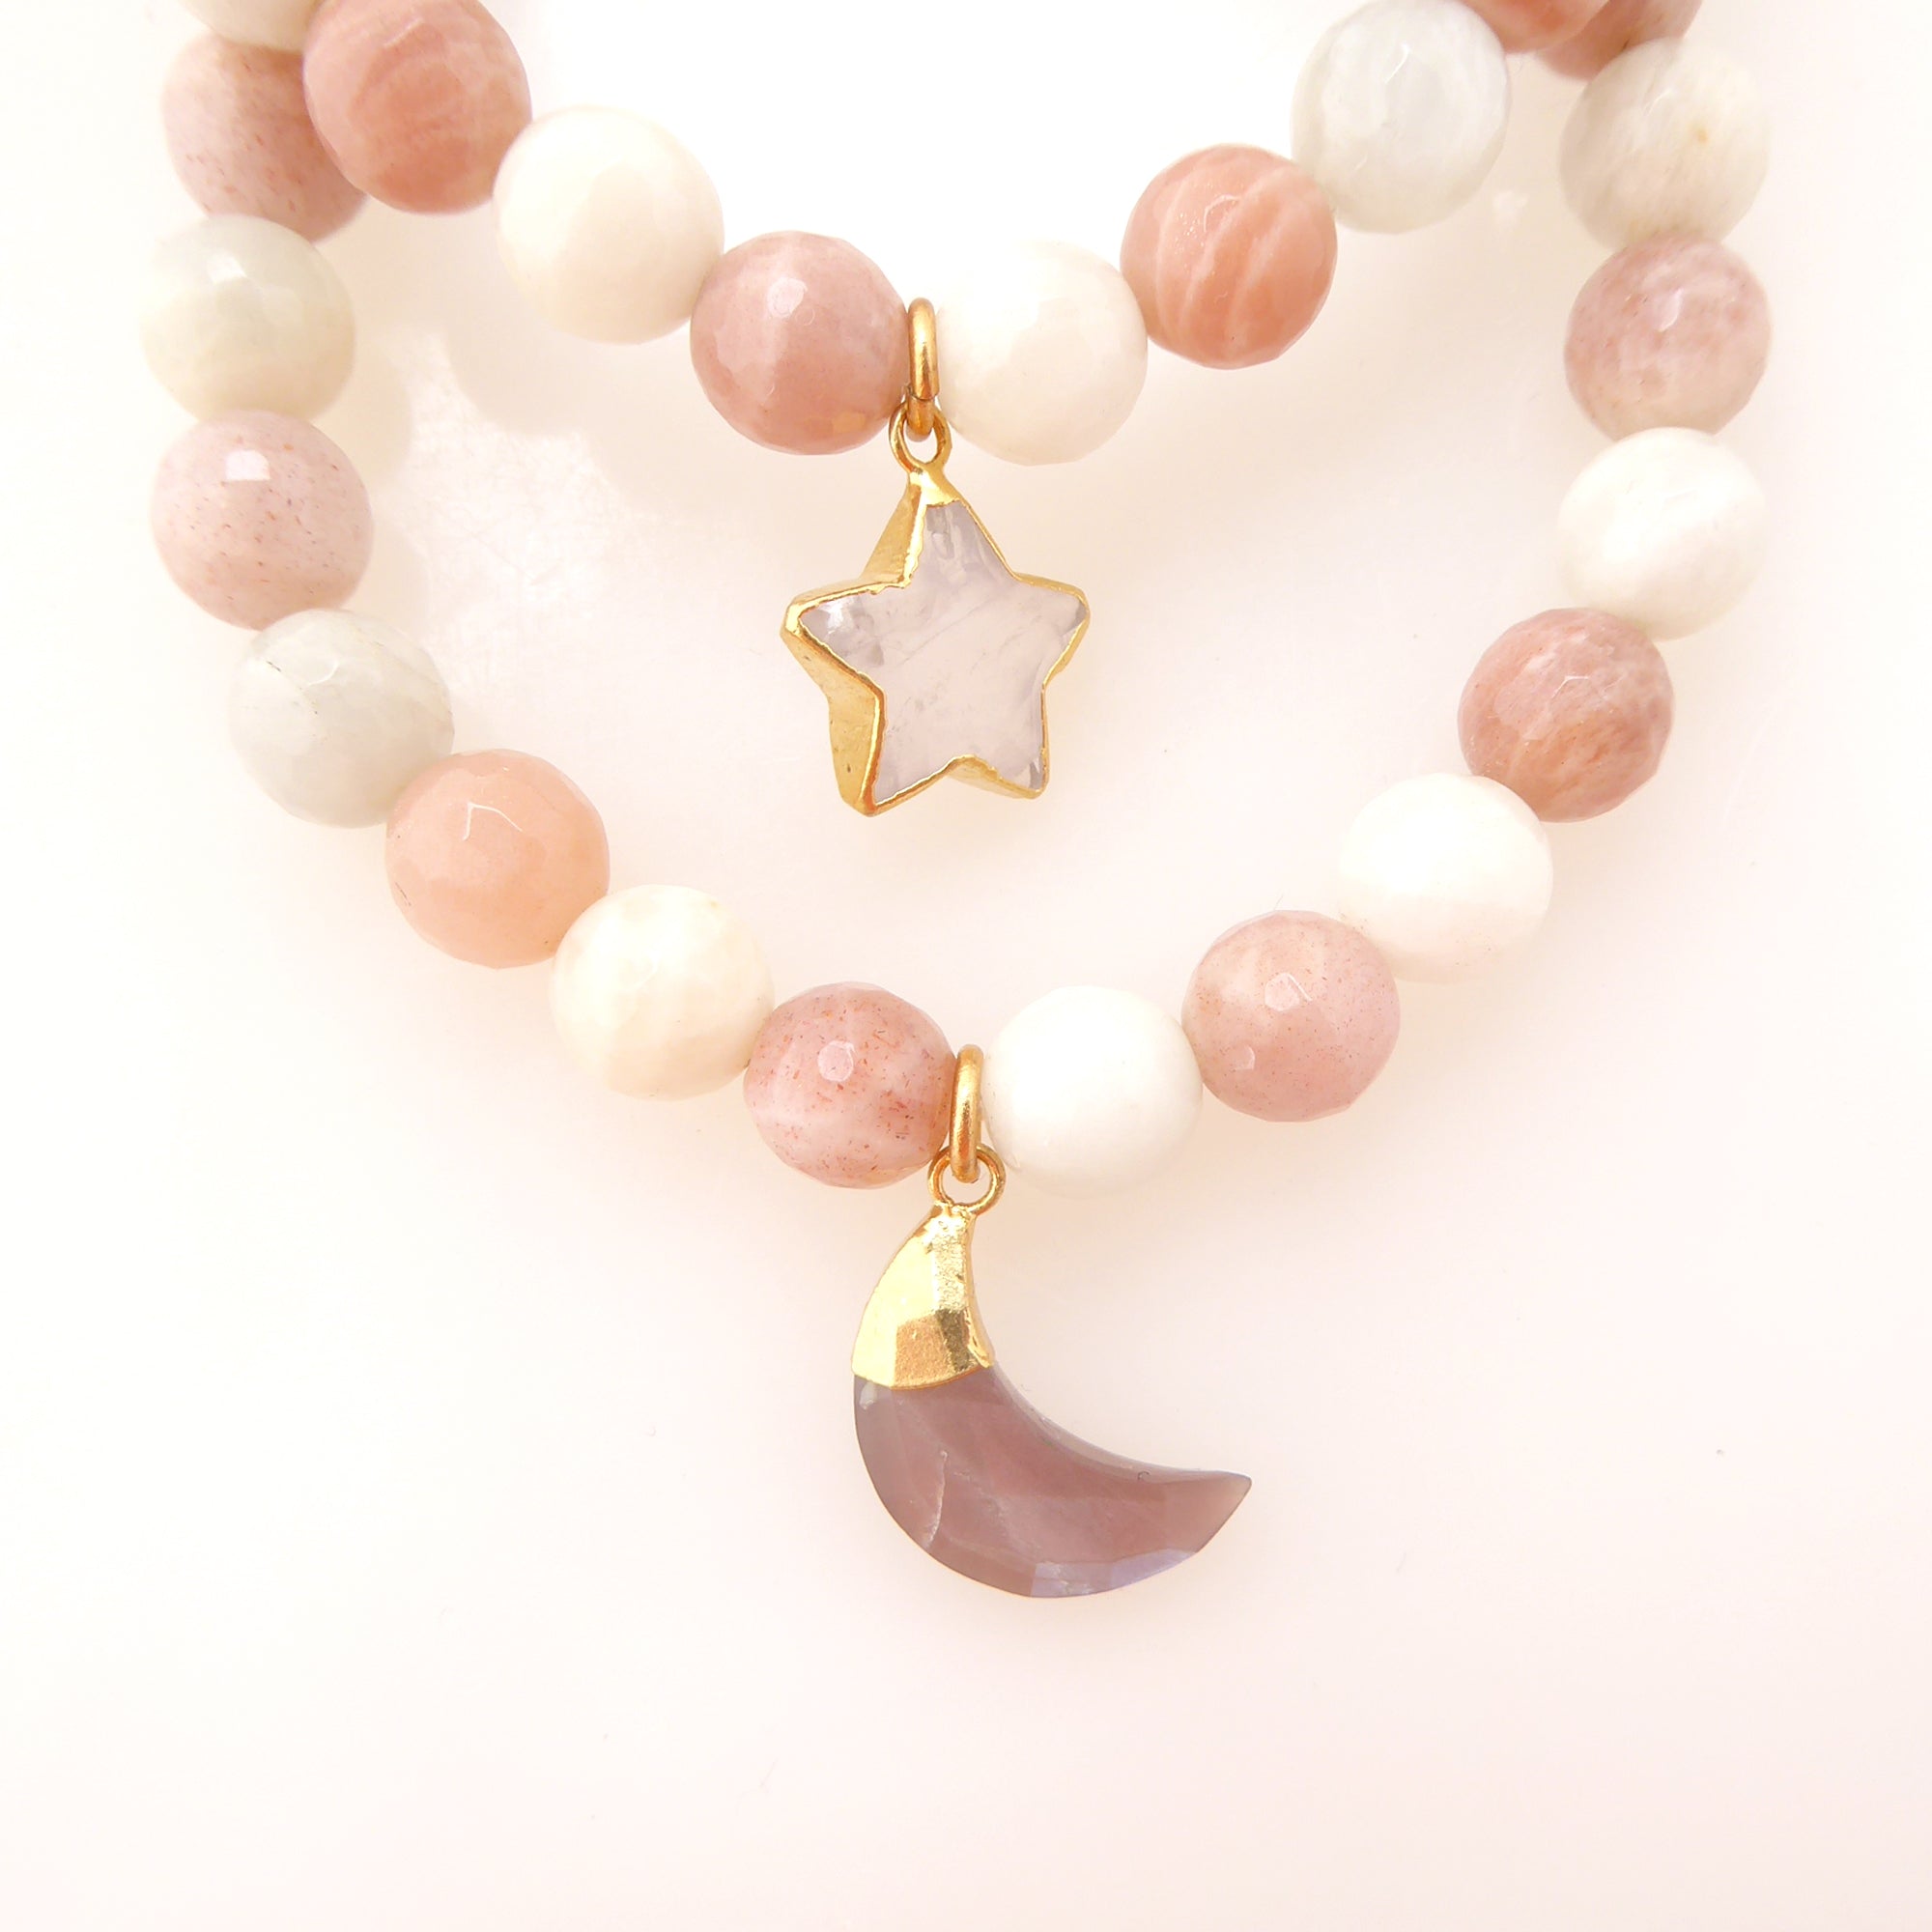 Peach and white moonstone bracelet set by Jenny Dayco 4